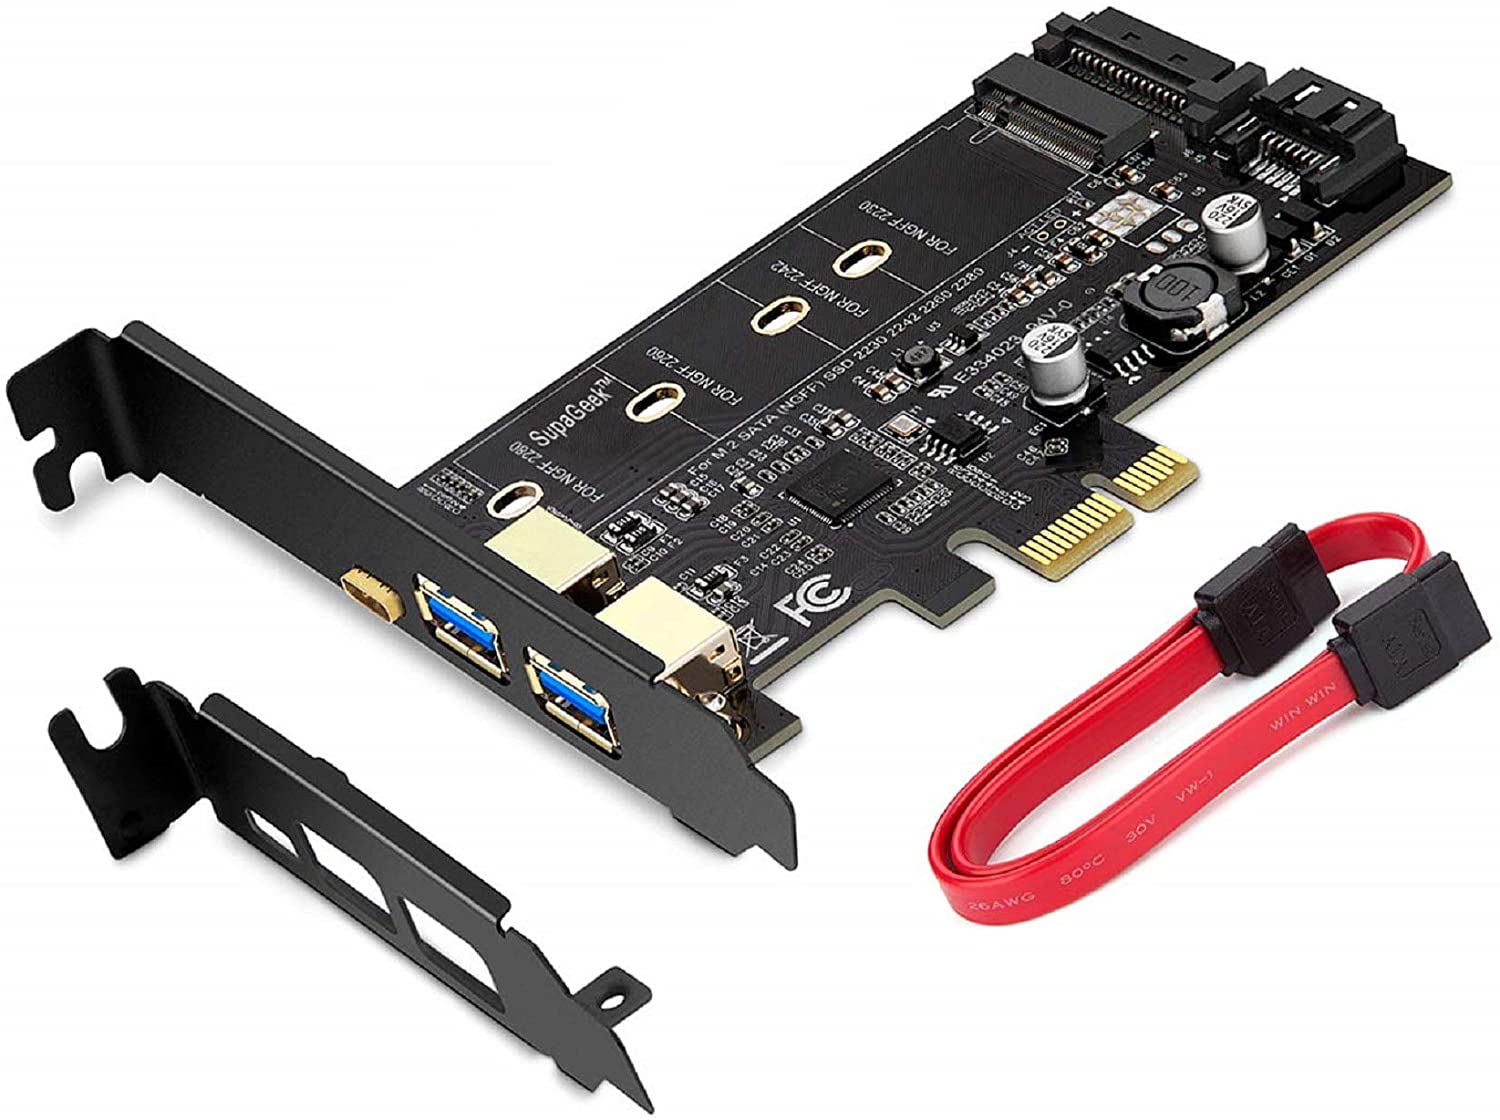 MZHOU USB 3.0 adapter with M.2 SATA SSD slot